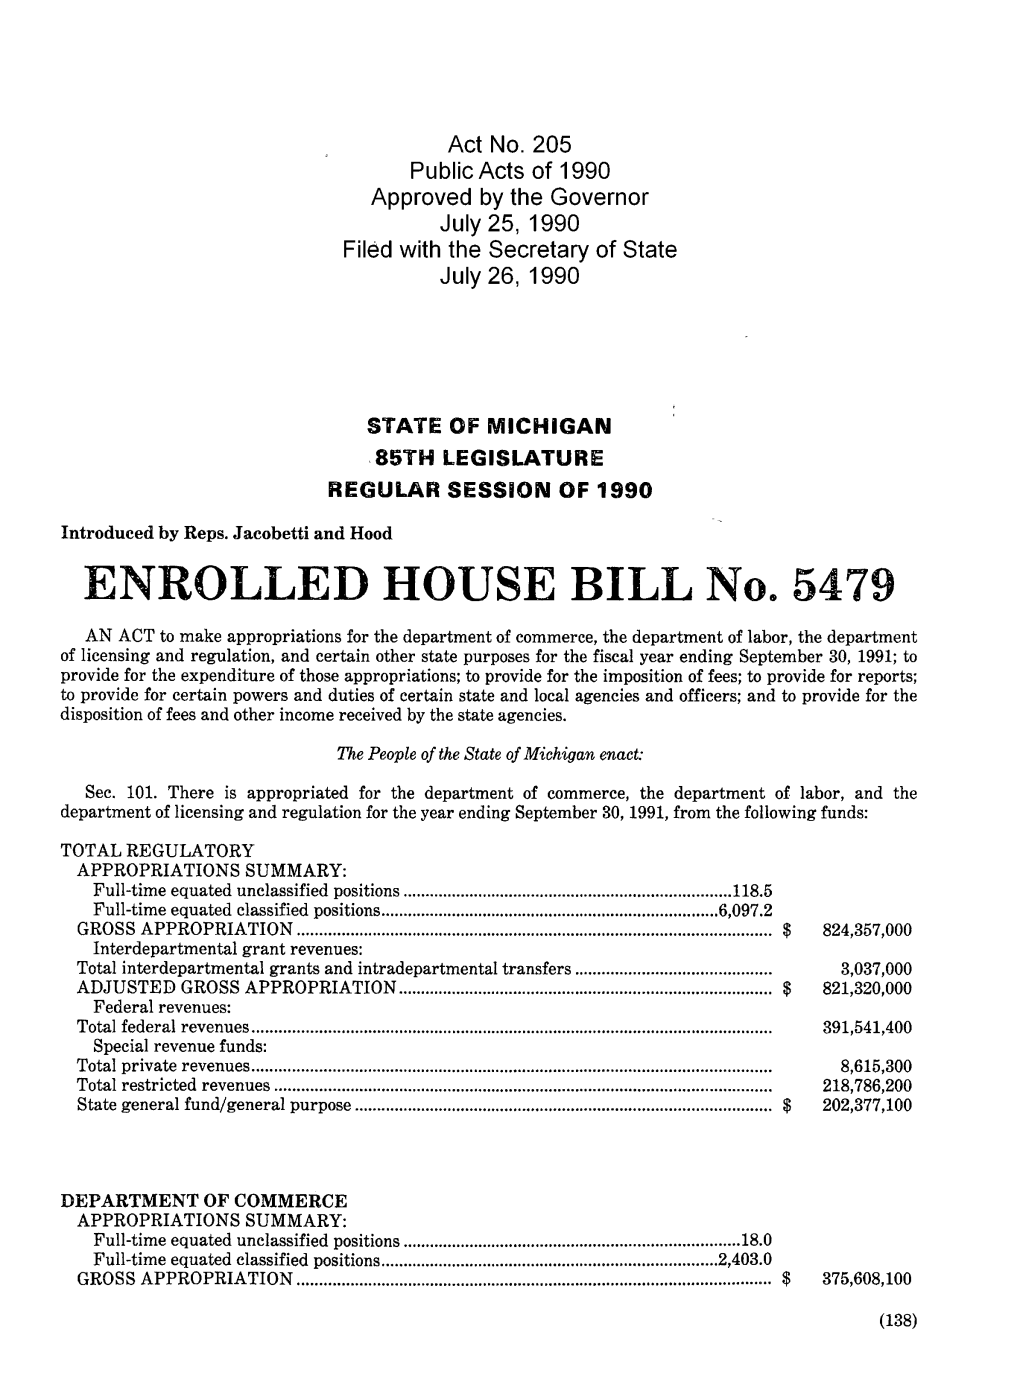 1990 House Enrolled Bill 5479